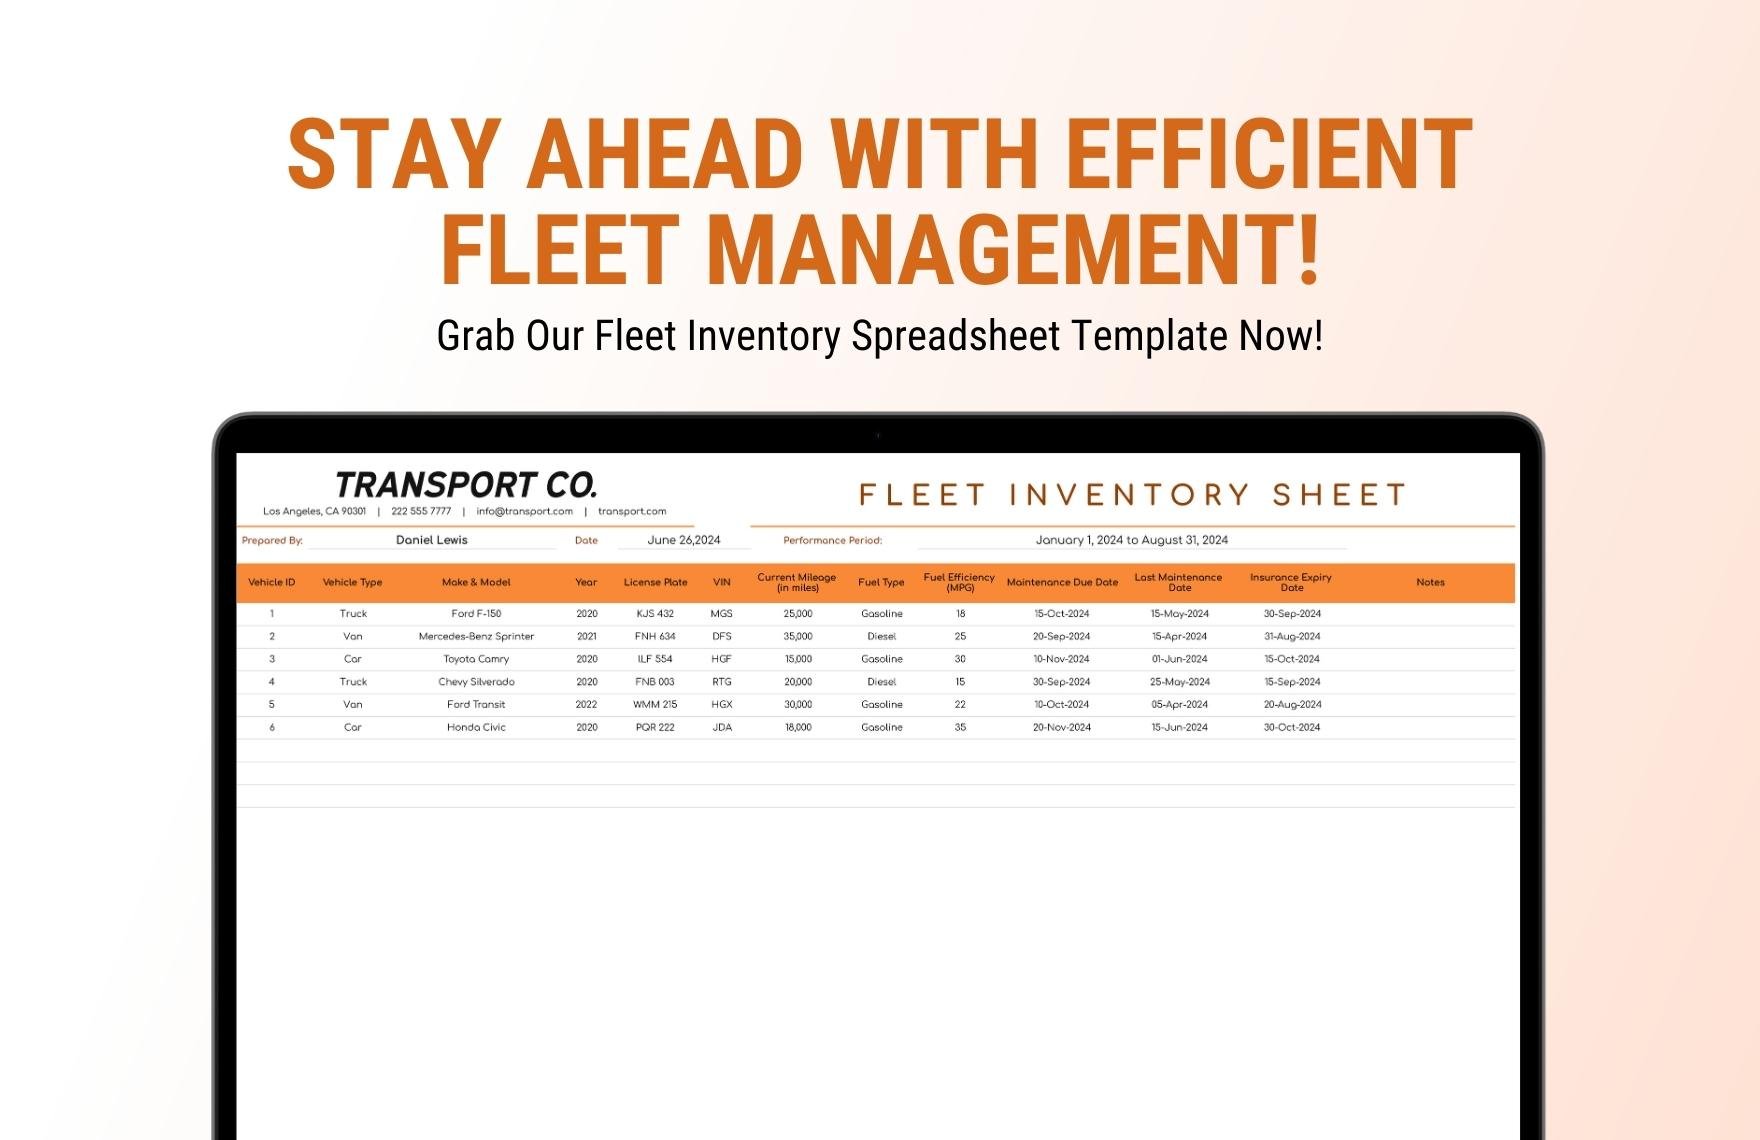 Transport and Logistics Fleet Inventory Spreadsheet Template